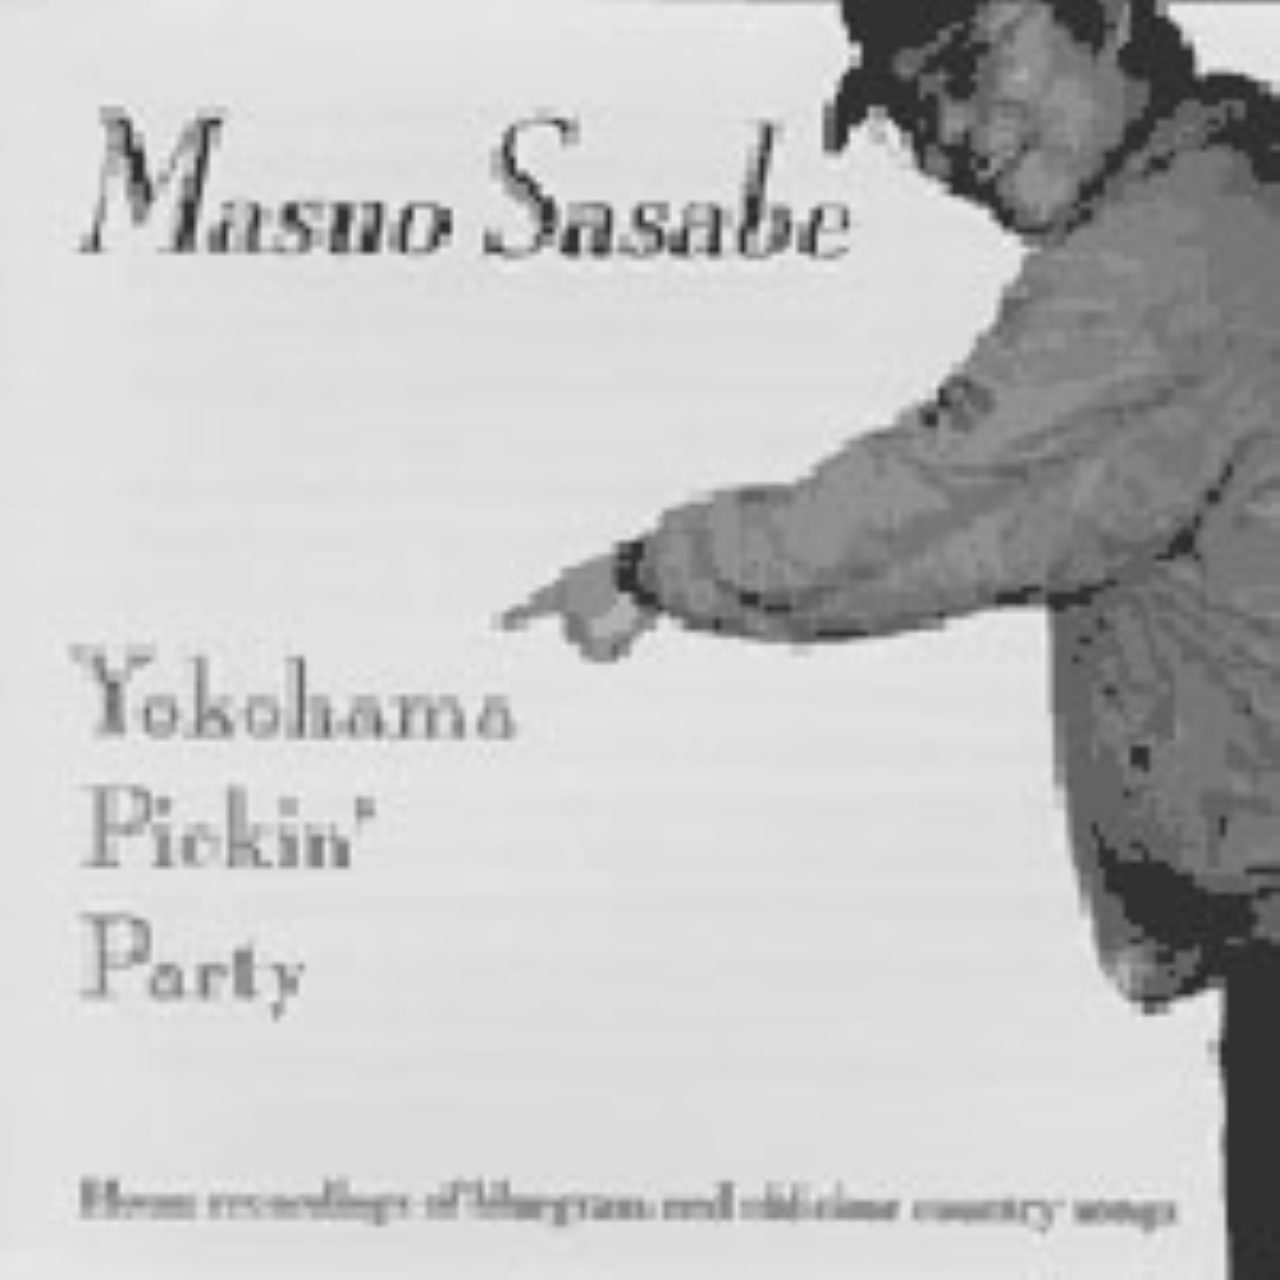 Masuo Sasabe – Yokohama Pickin’ Party cover album